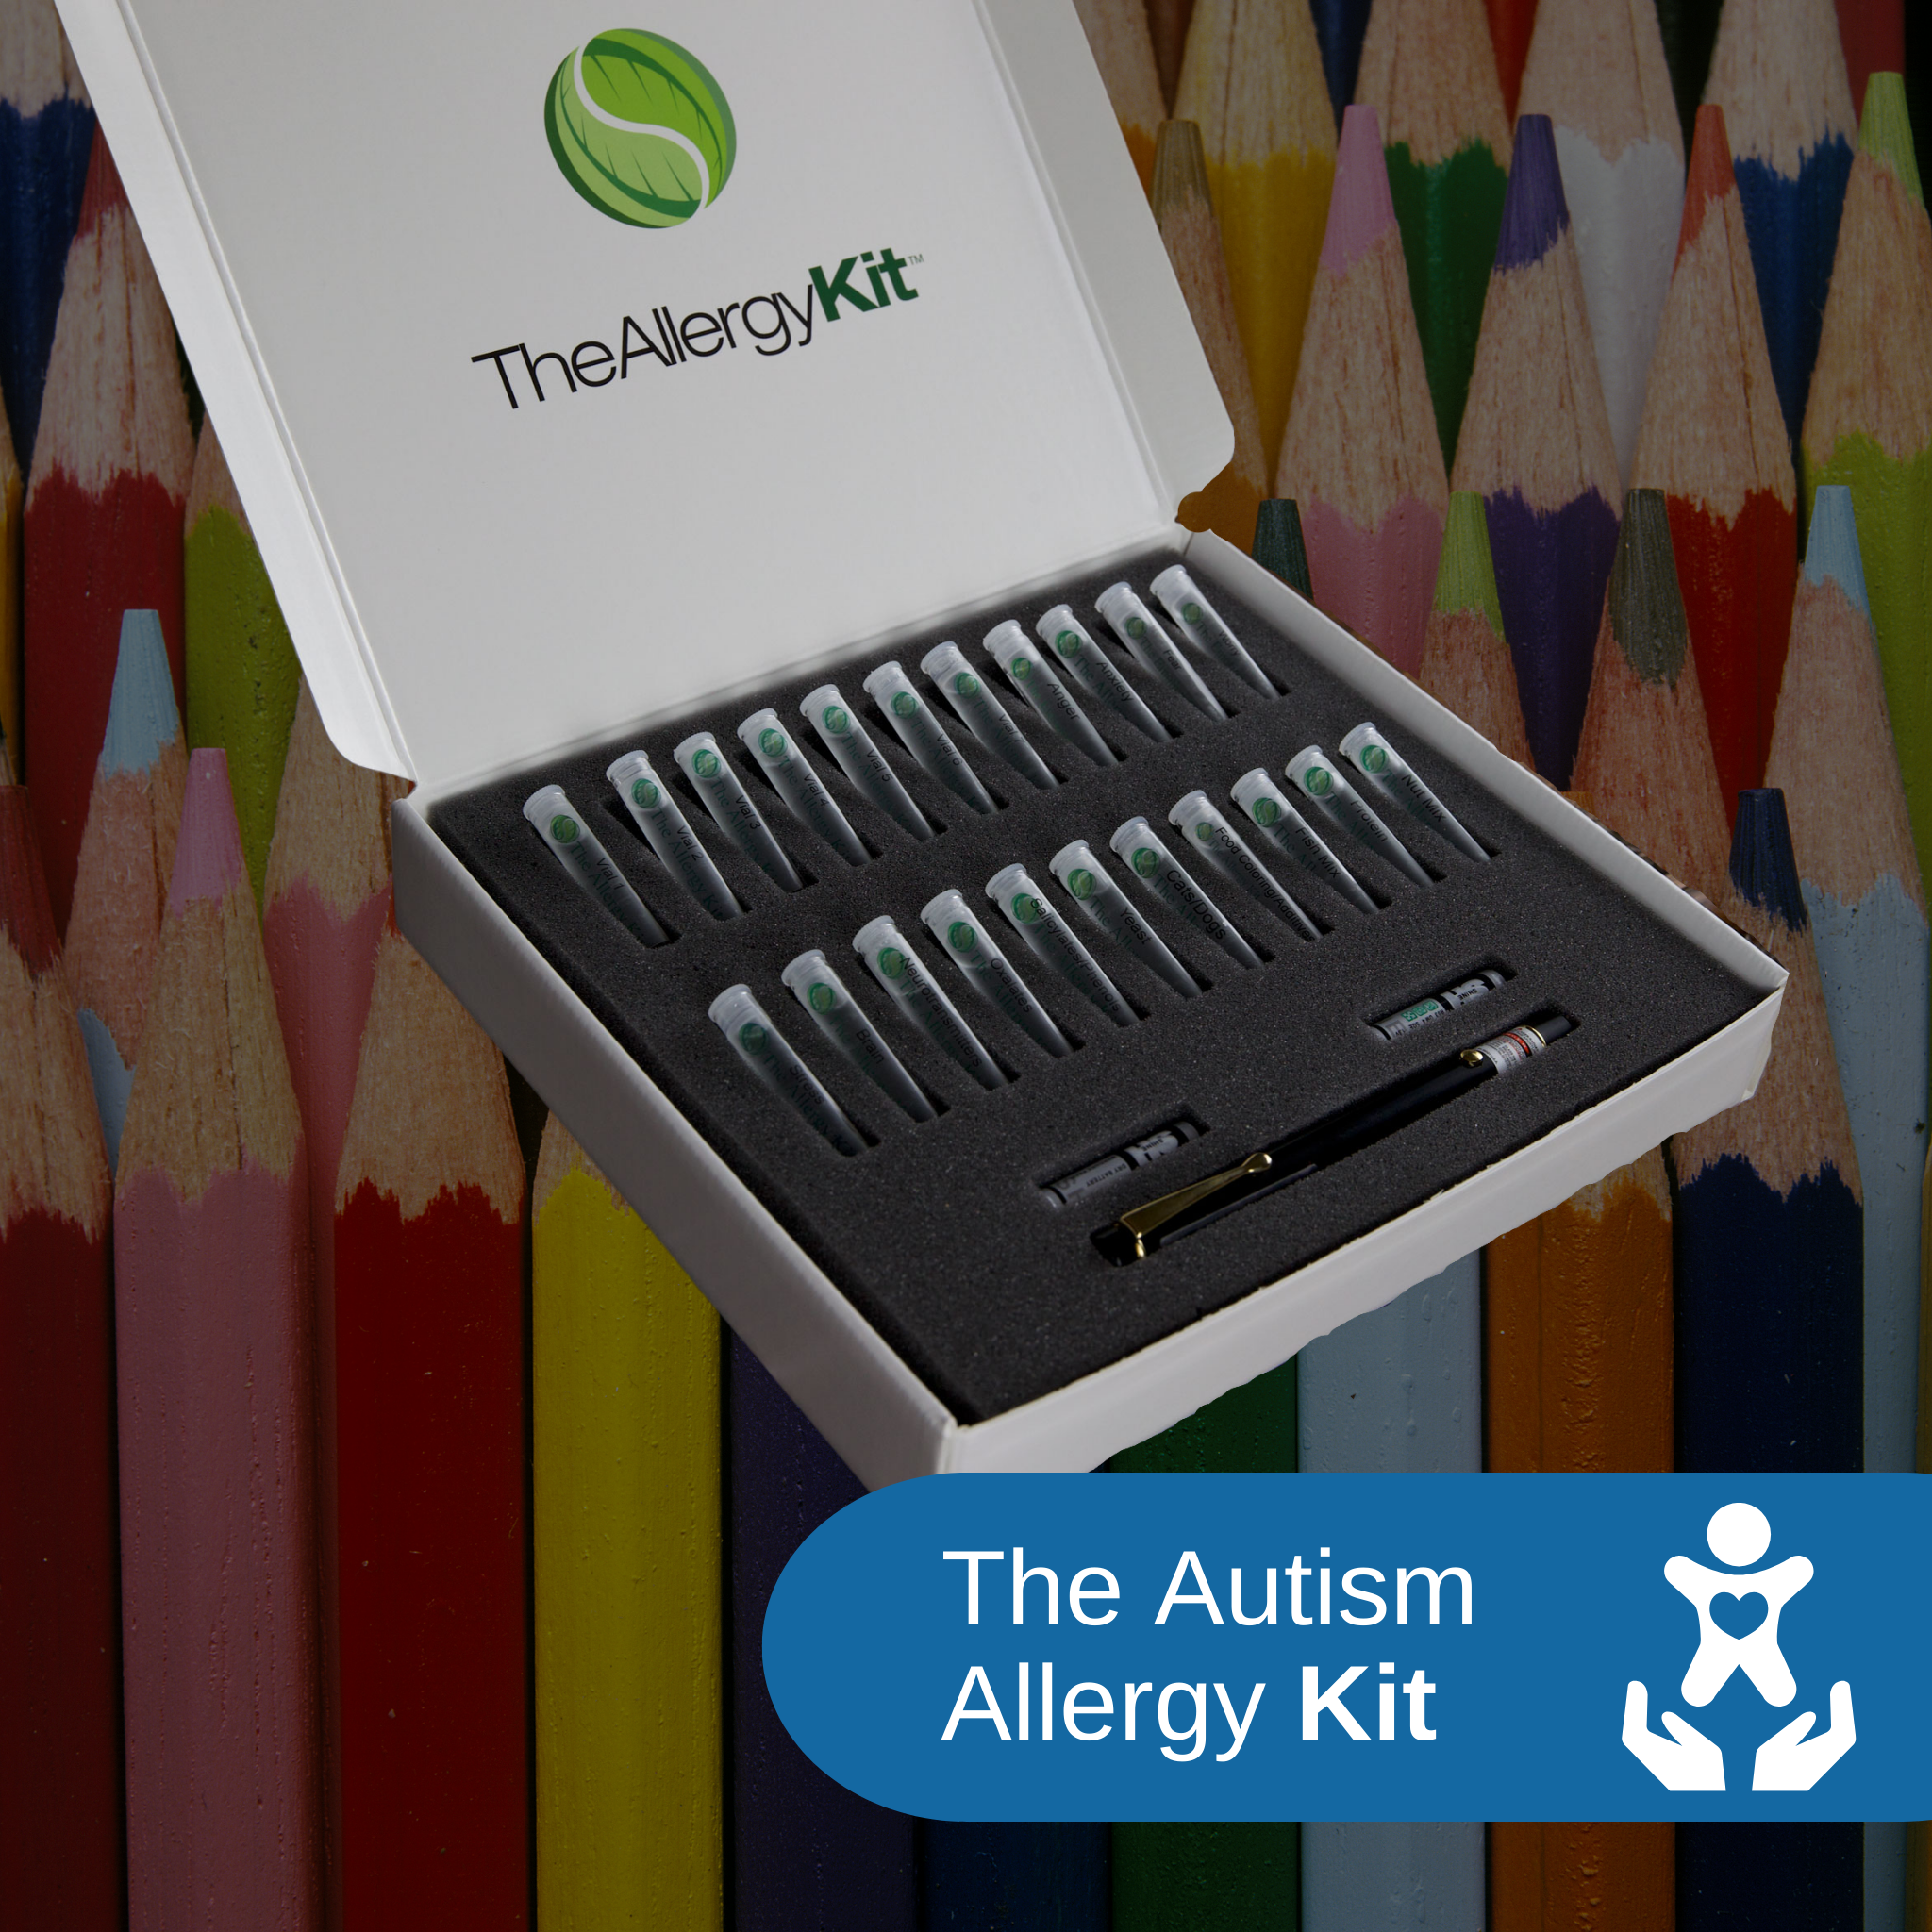 The Autism Allergy Kit